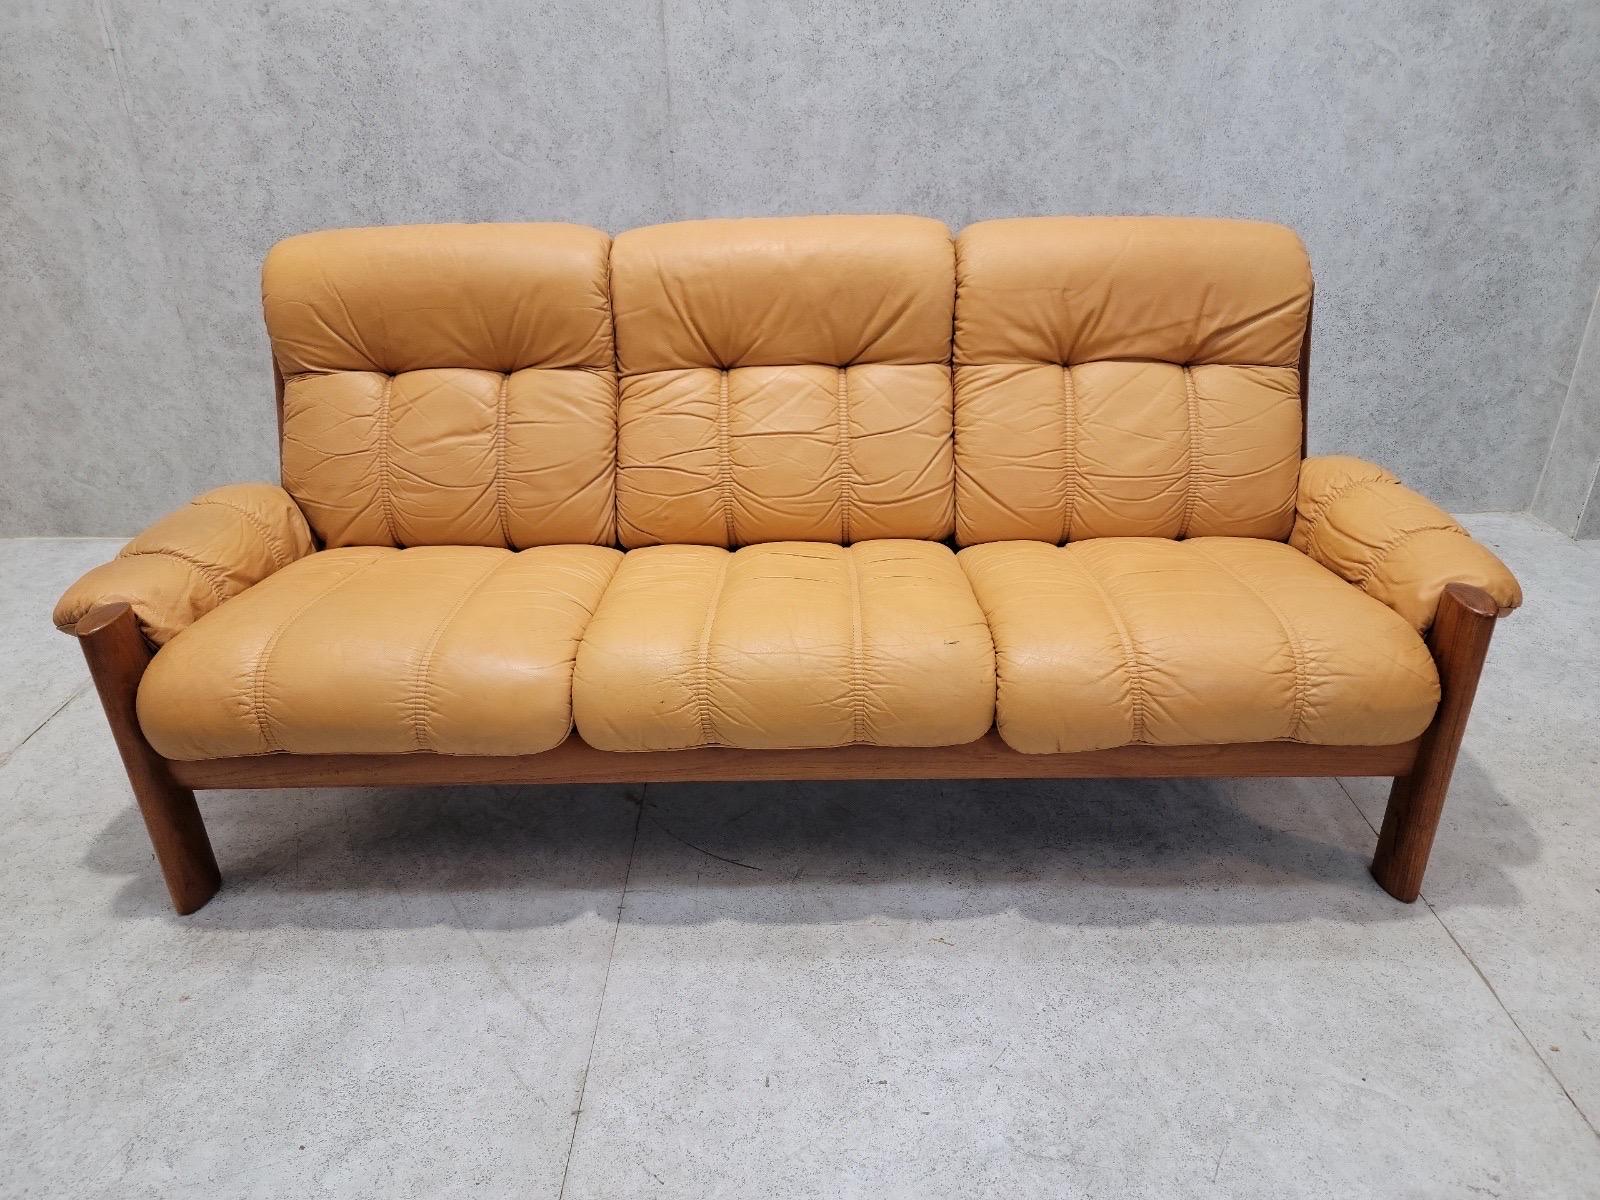 Mid Century Danish Modern Teak & Leather Sofa from Ekornes by Stressless For Sale 2